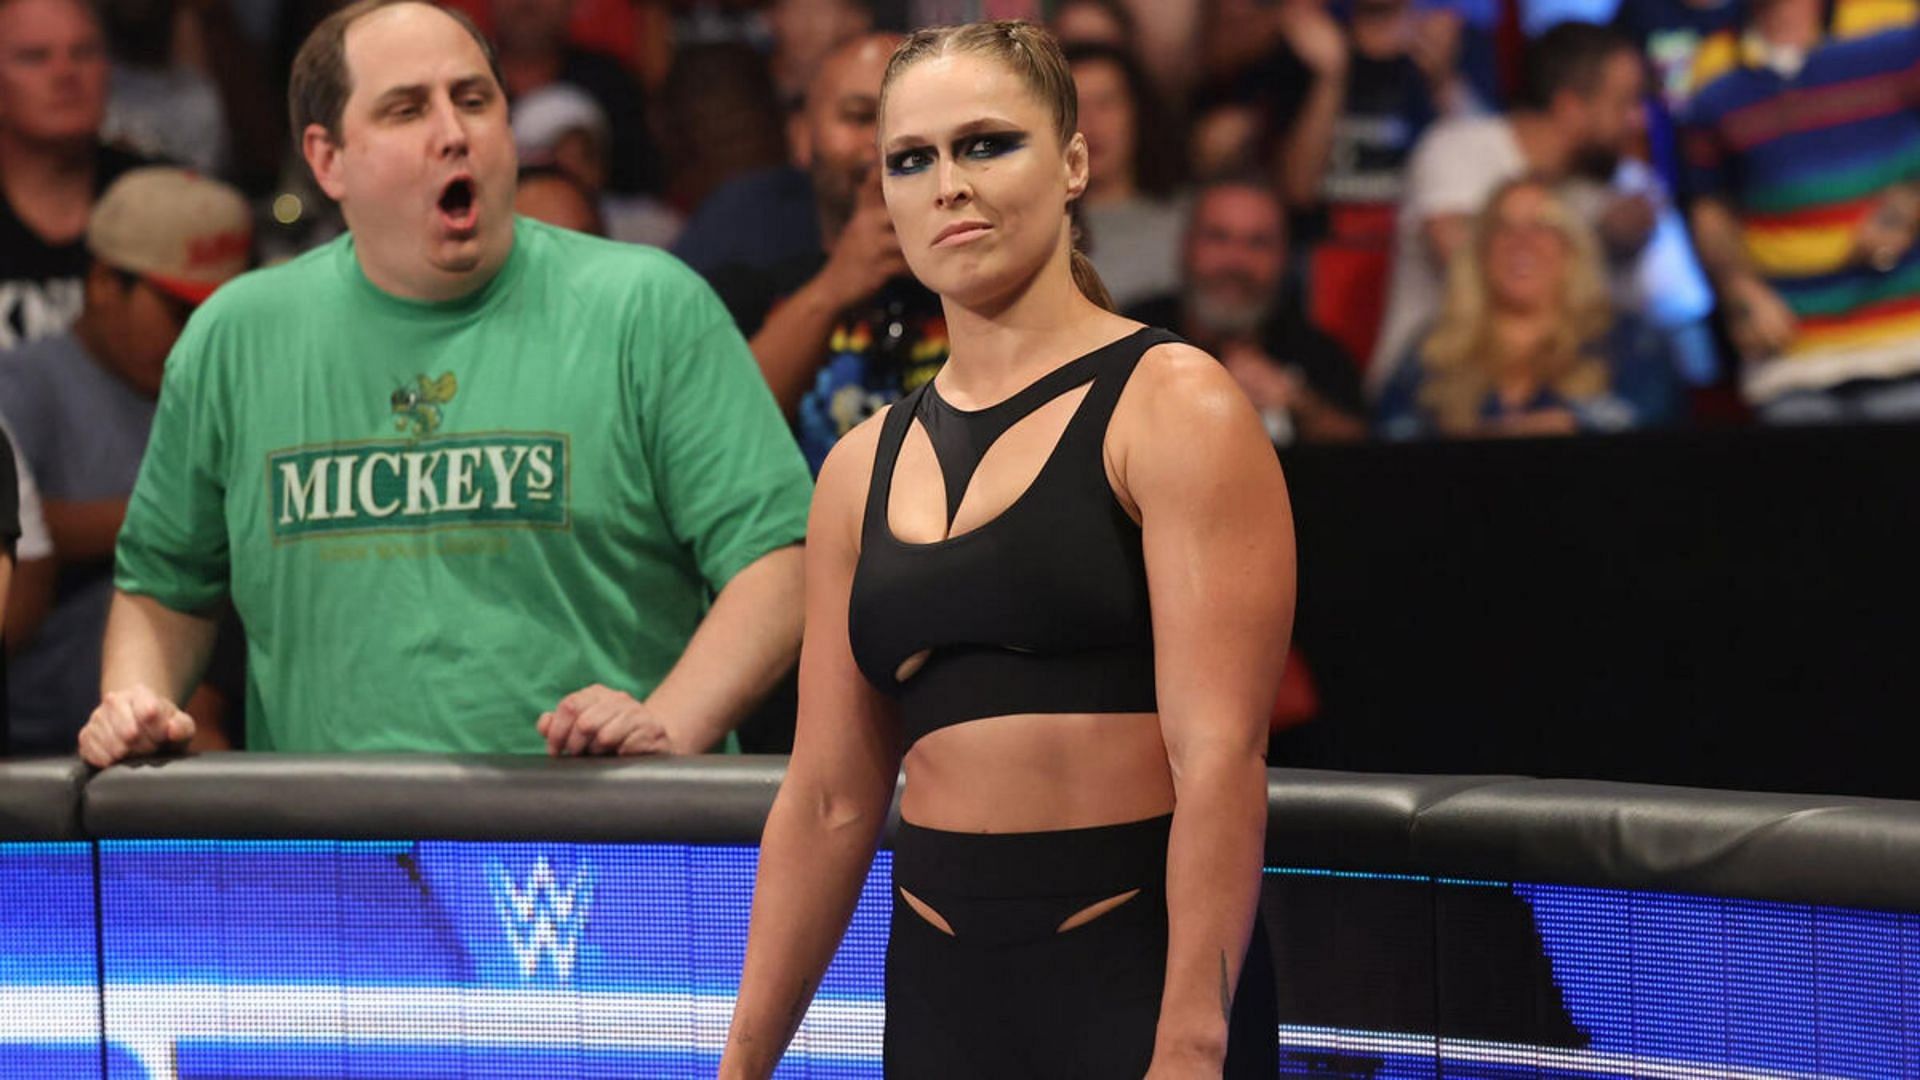 Ronda Rousey left WWE last year